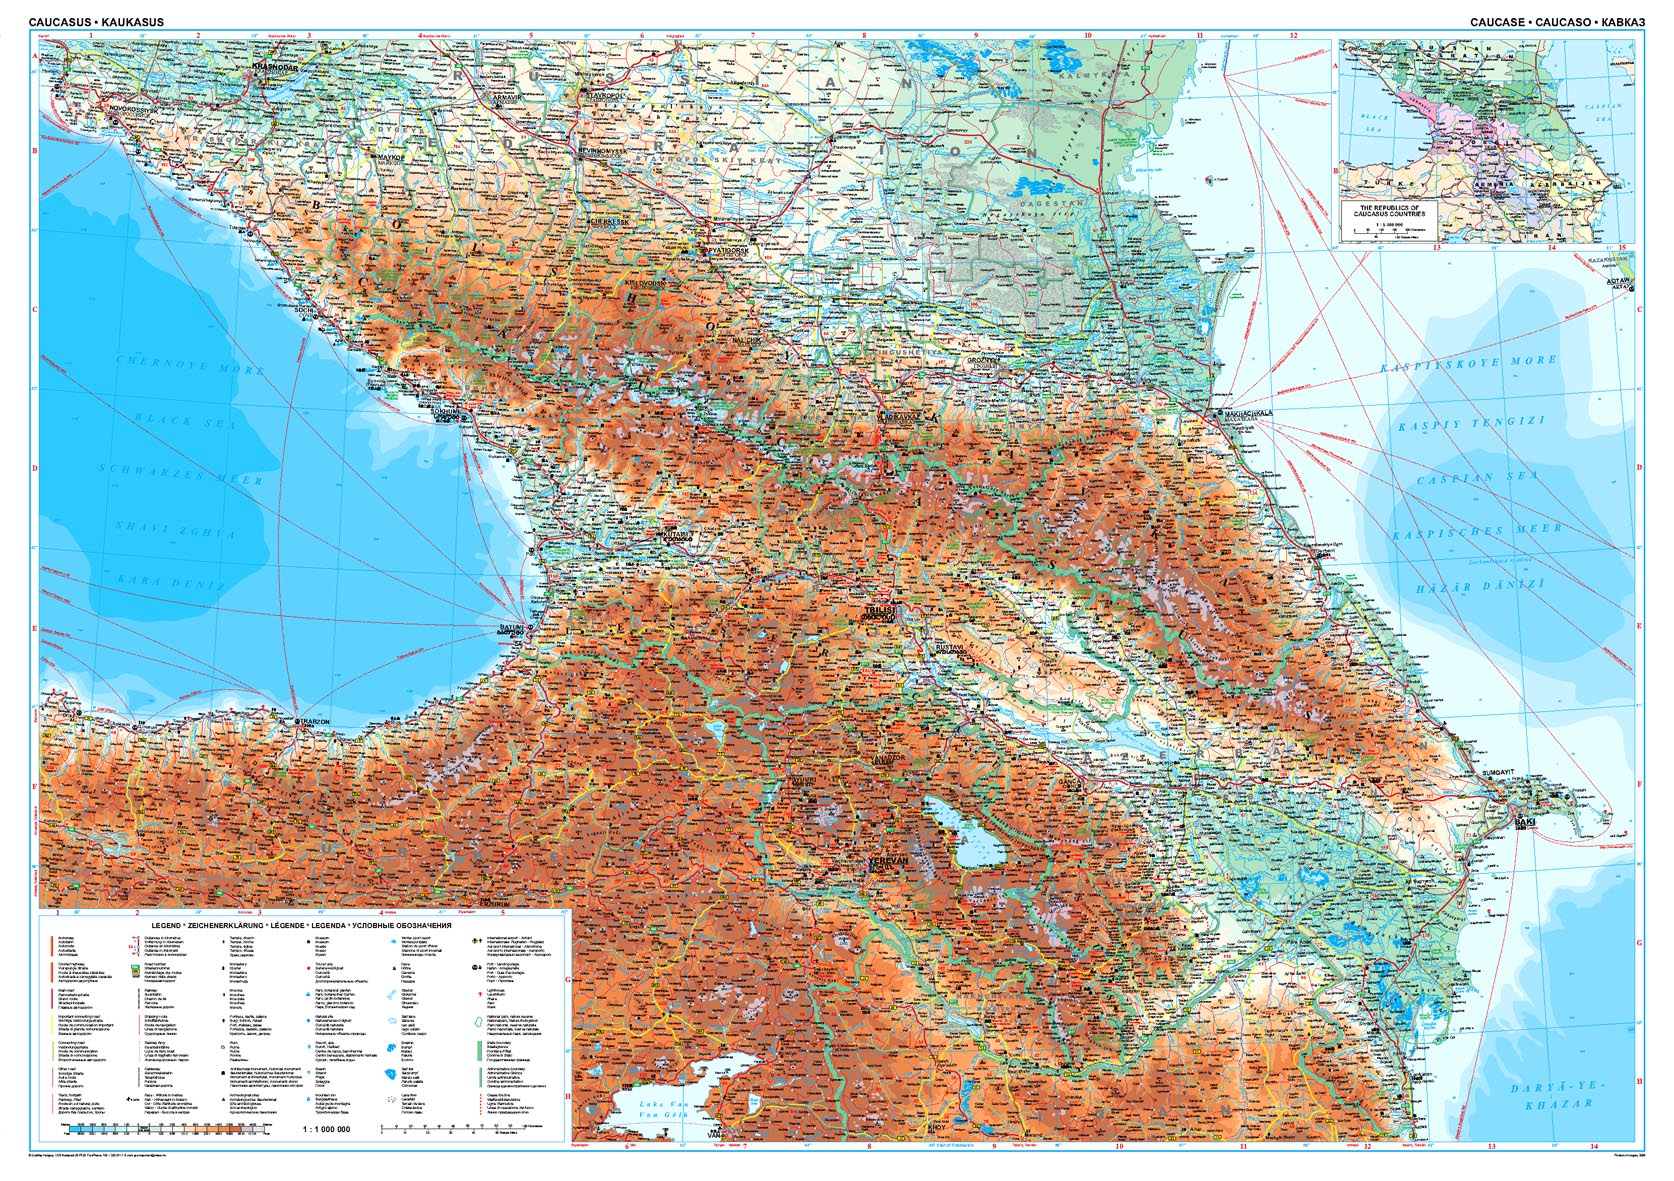 Kaukasus Geographical Map 1:1 Mio.